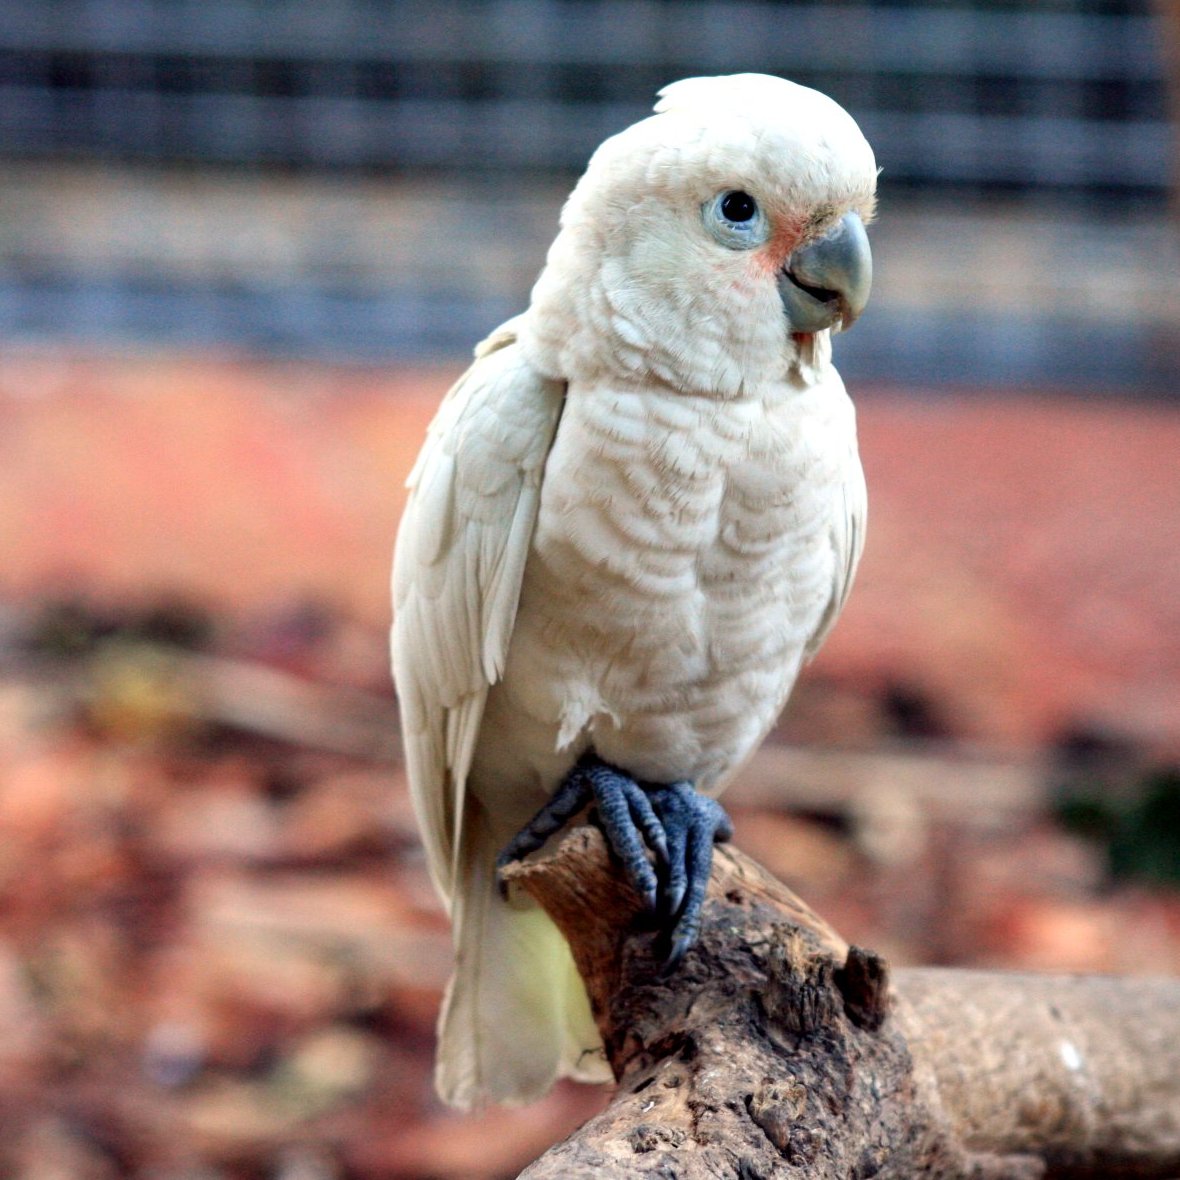 Mineola pet shop seeks return of stolen ‘exotic’ bird